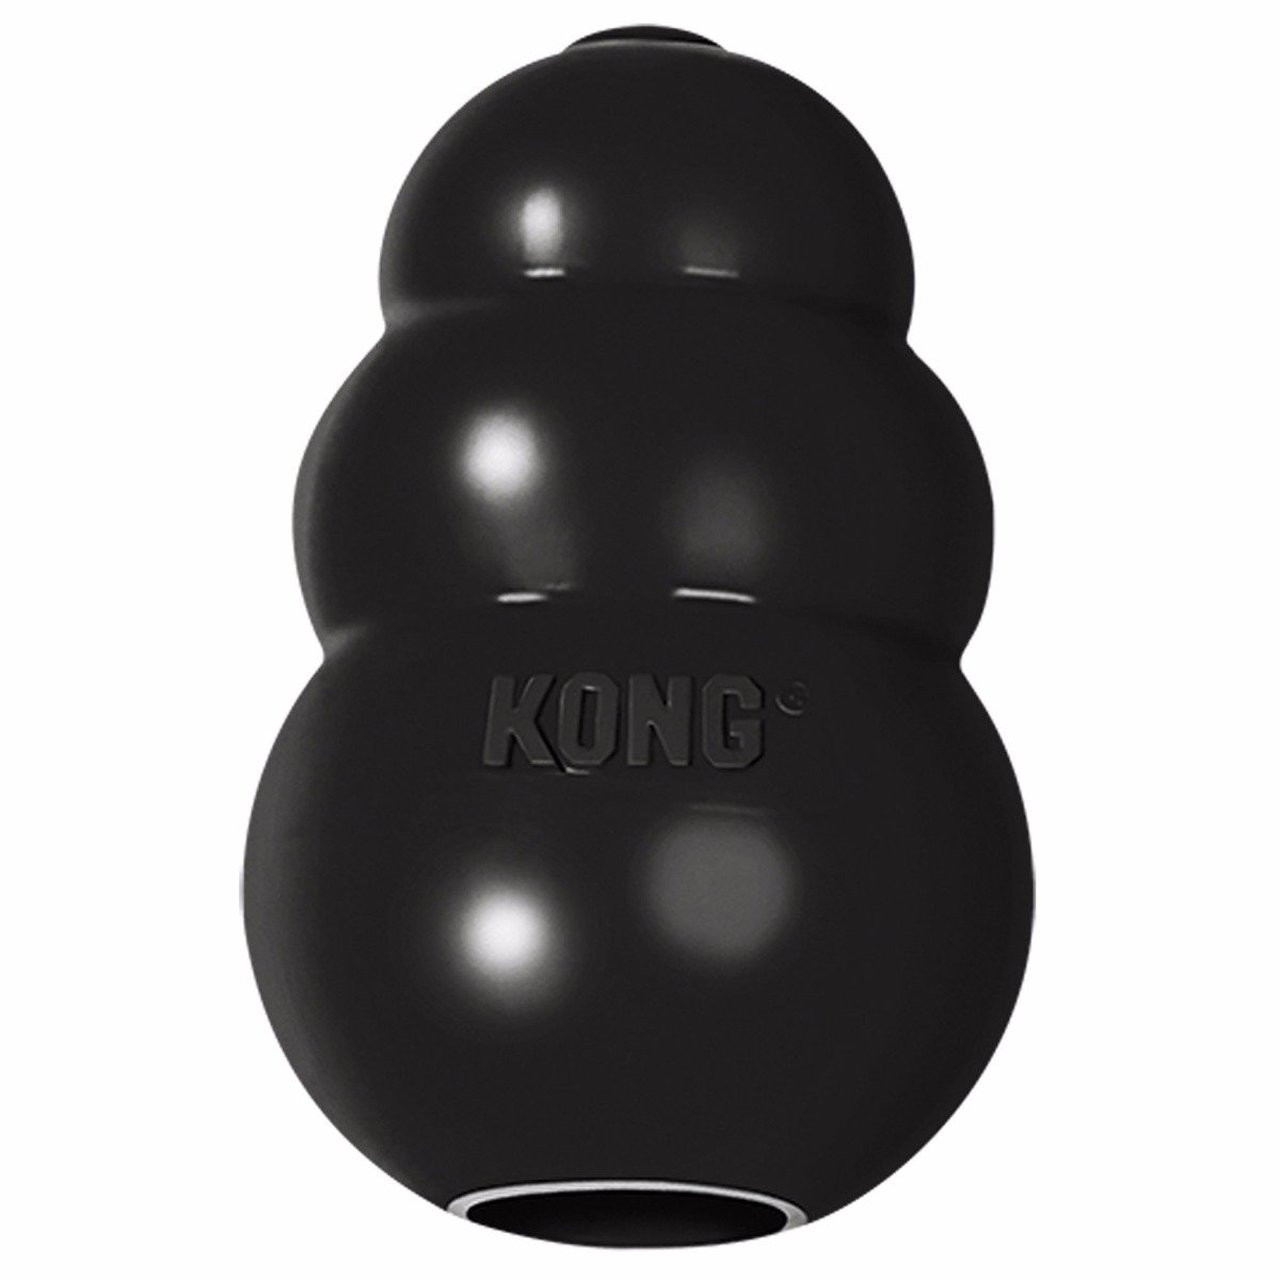 Kong Stuff-A-Ball Medium- Kong Dog Toys- Made in USA Dog Toy